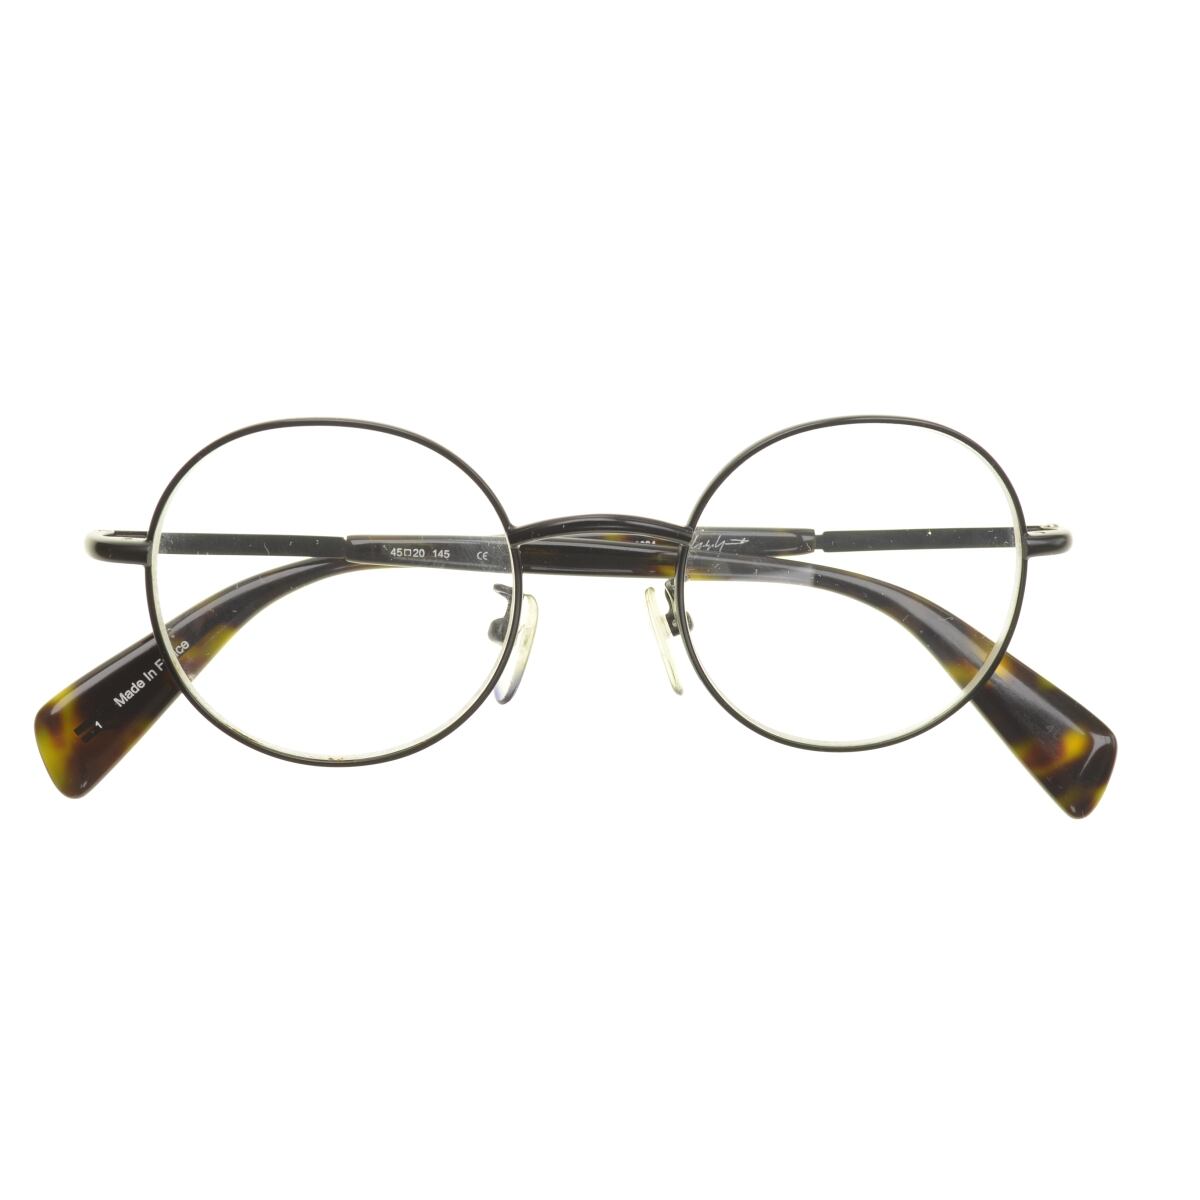 YOHJI YAMAMOTO / ヨウジヤマモト フランス製 19-0004 ラウンド 眼鏡